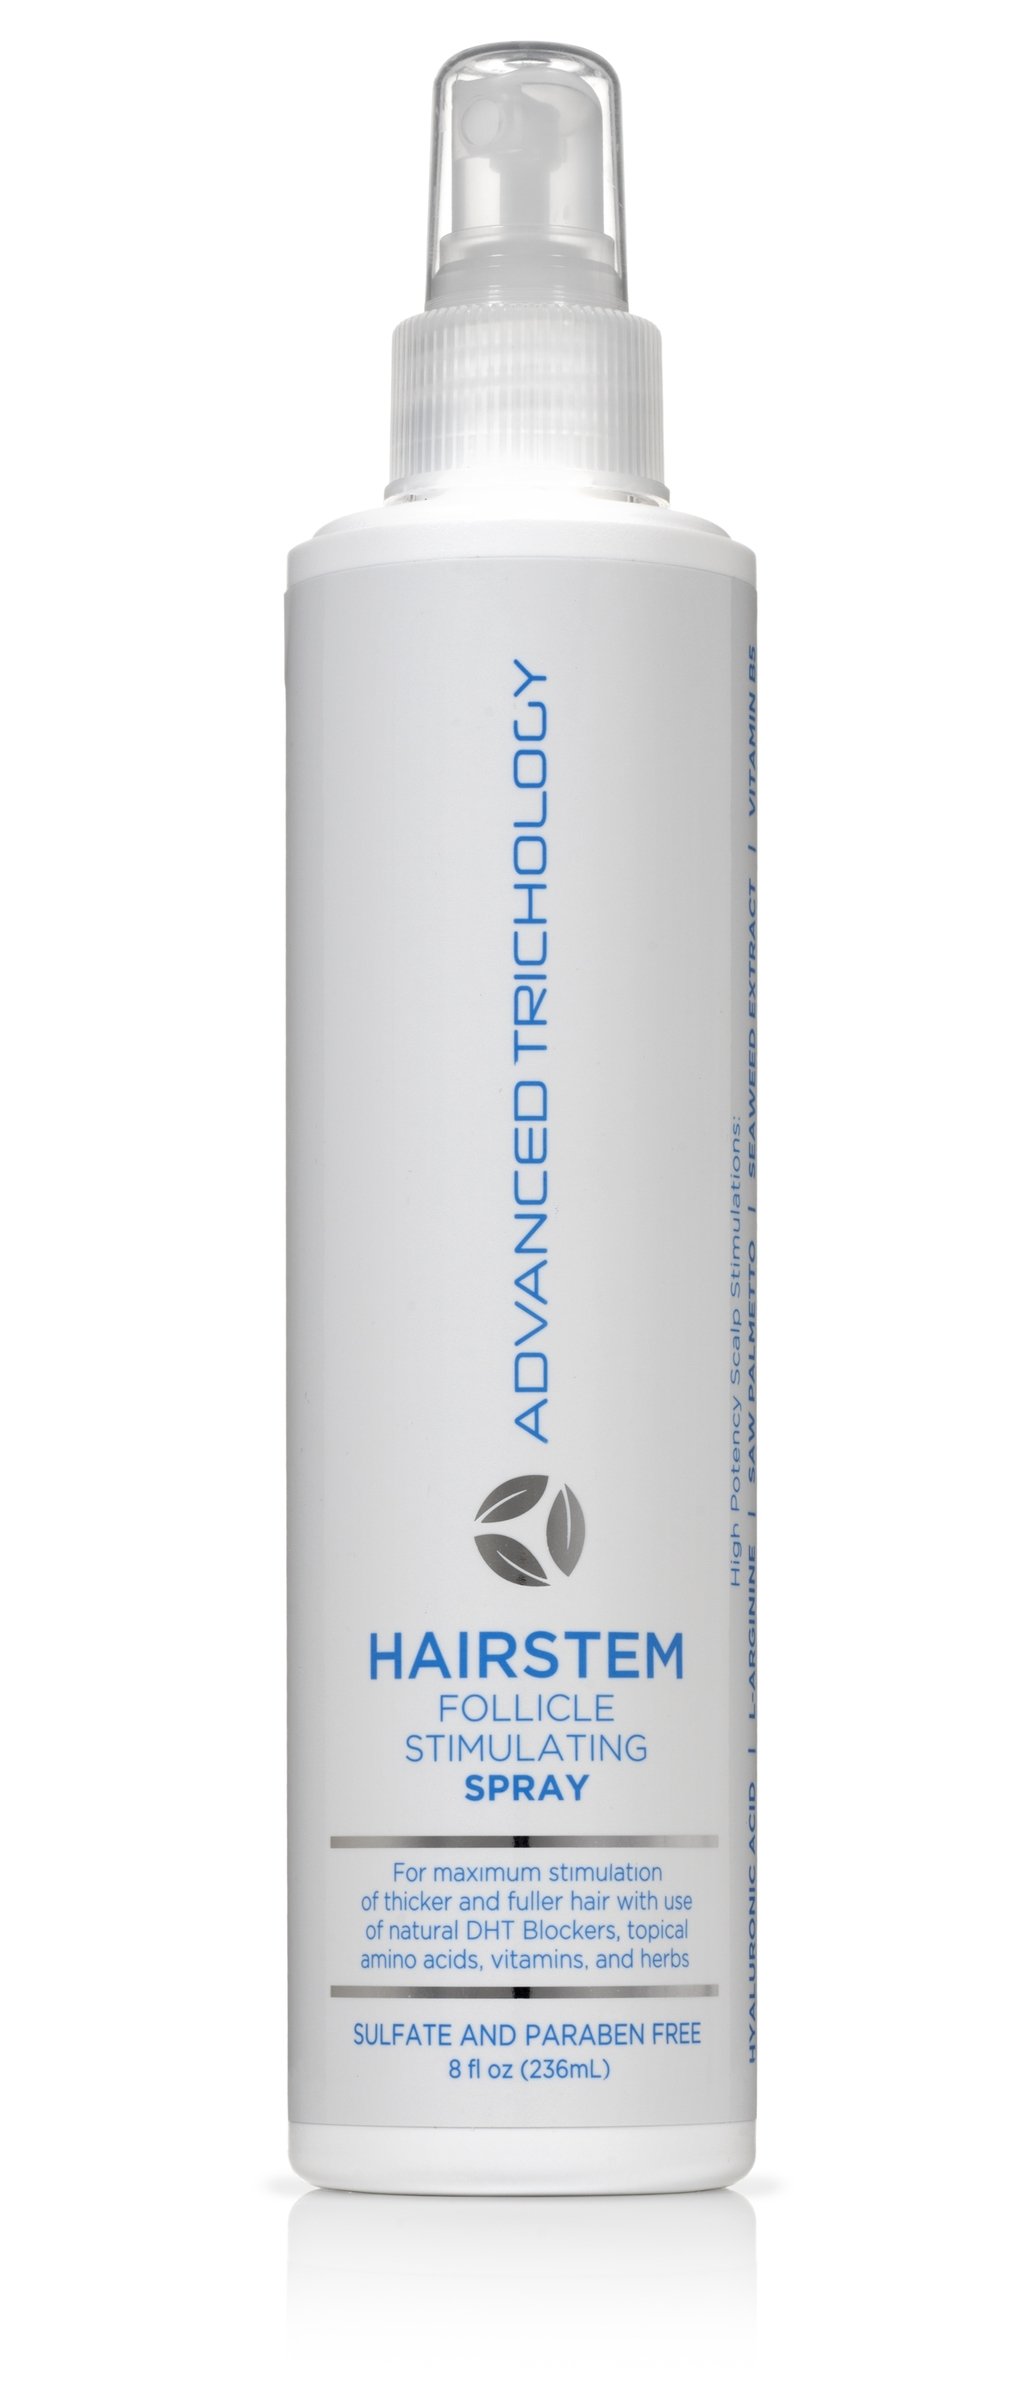 HairStem Follicle Stimulating Spray - Clinical Strength Hair Growth Stimulator - Biotin, Saw Palmetto, Hyaluronic Acid 8oz